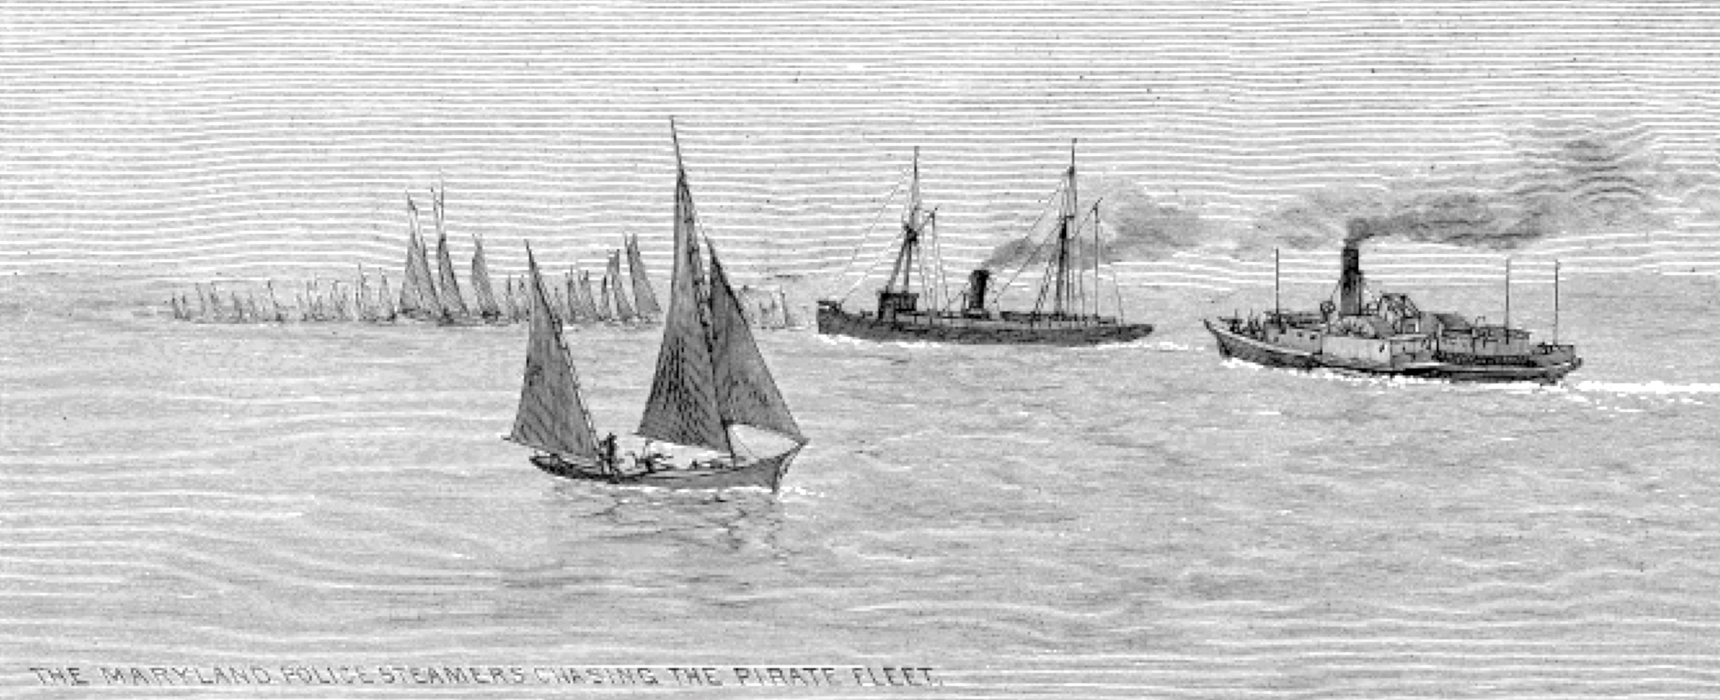 Illustration of Maryland police chasing pirate fleet